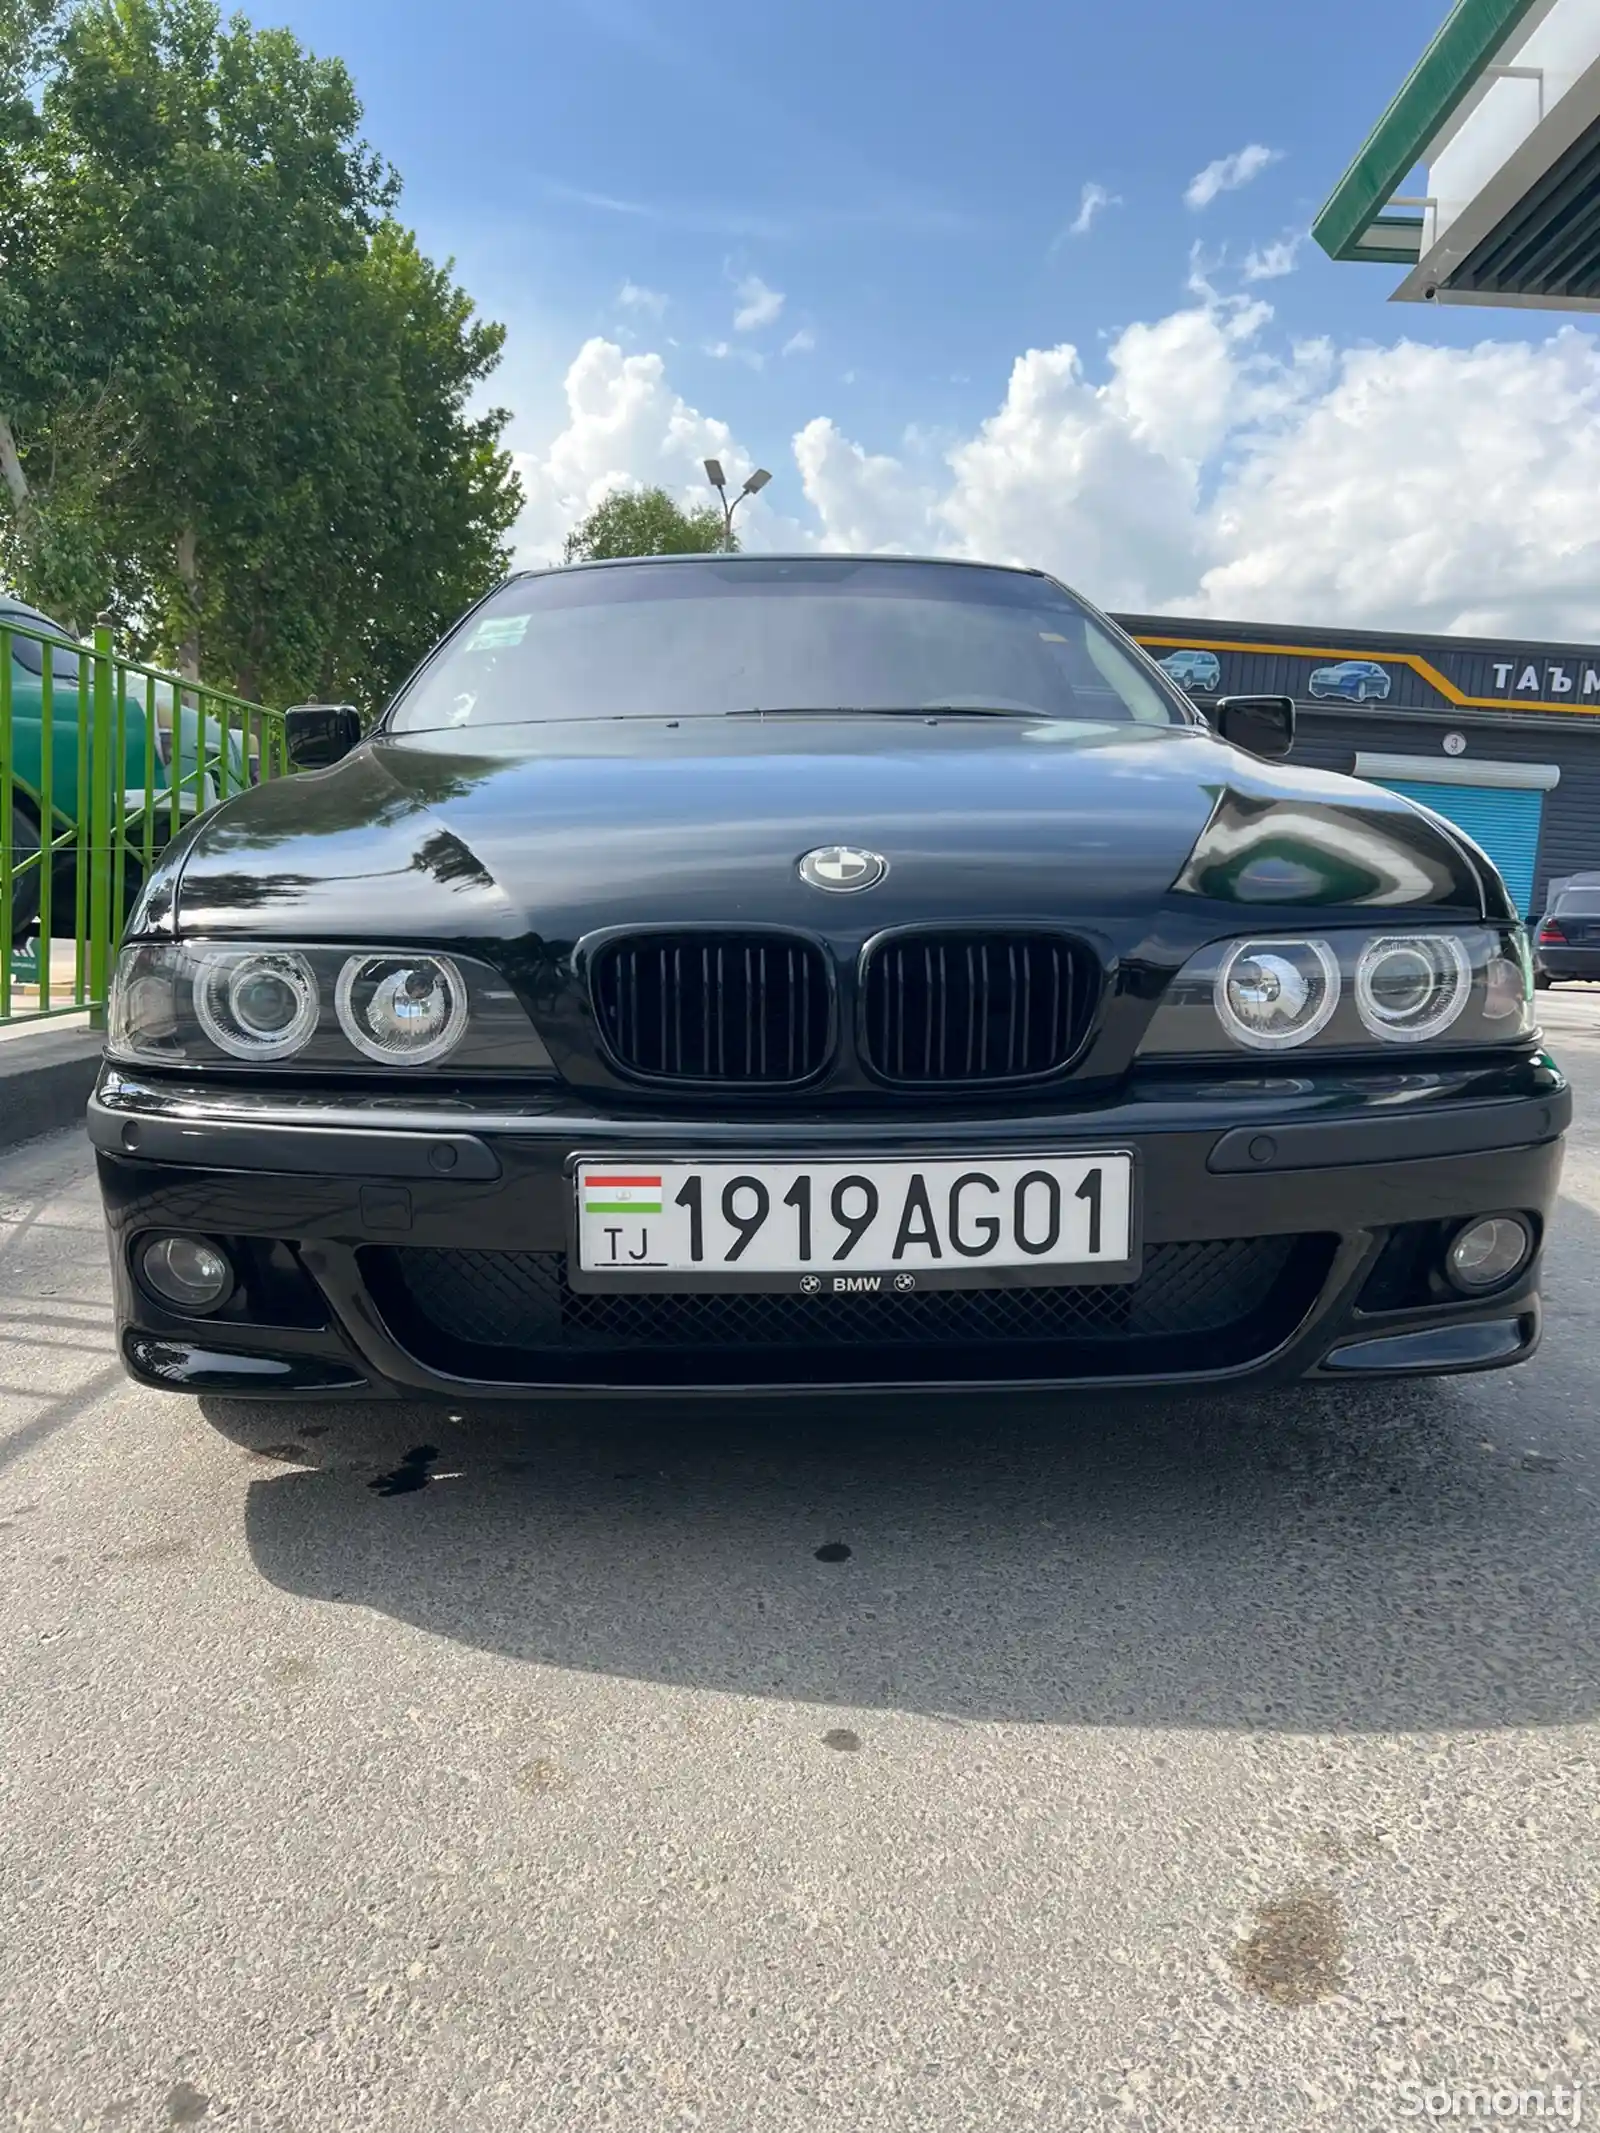 BMW 5 series, 1997-1